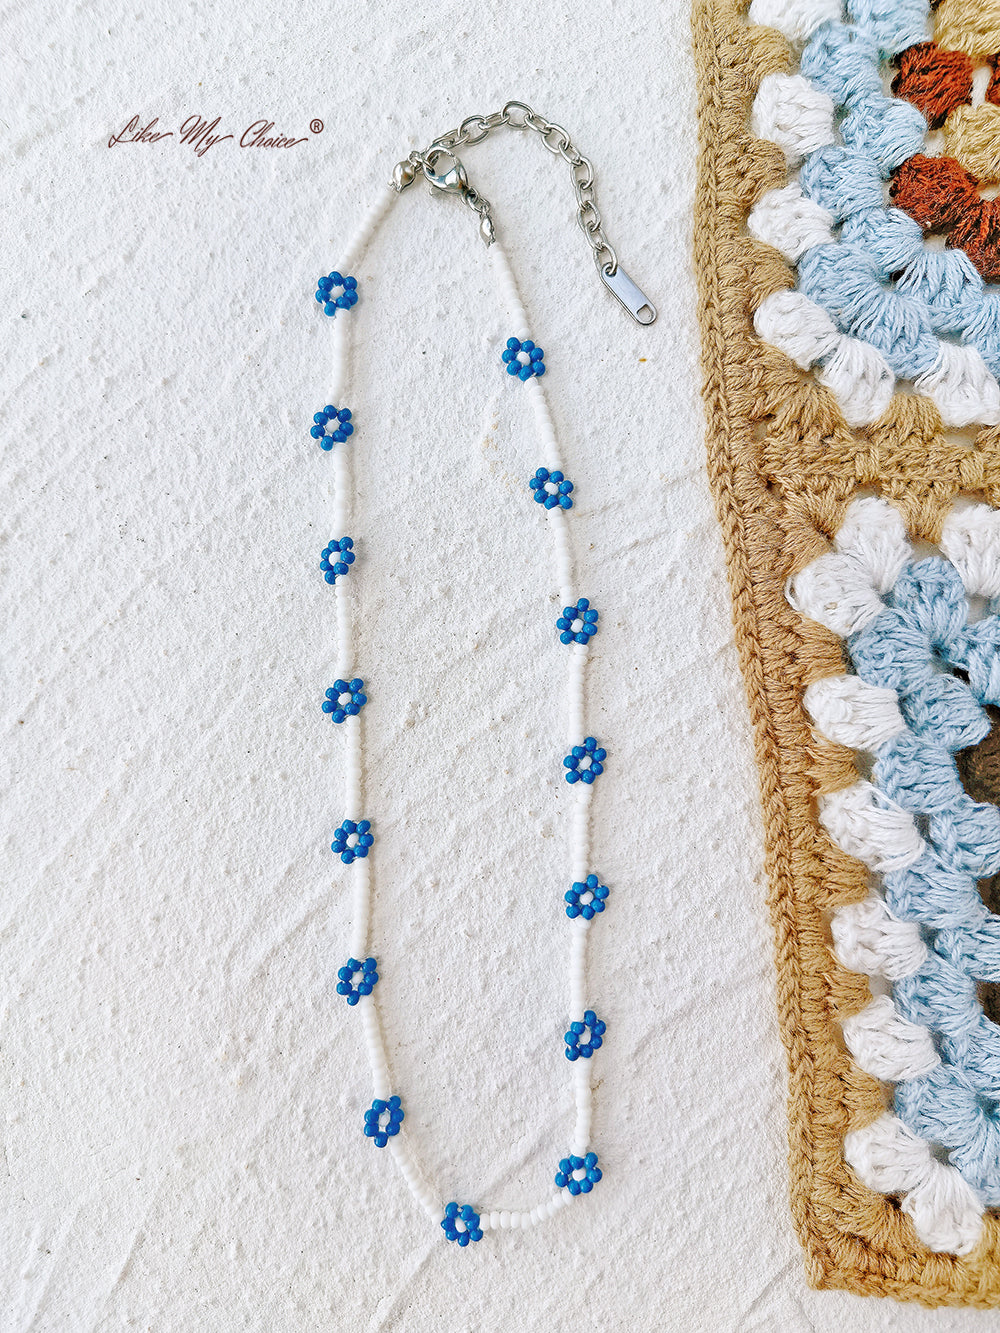 Verstellbares Perlenarmband mit Kordelzug, blaues Gänseblümchen